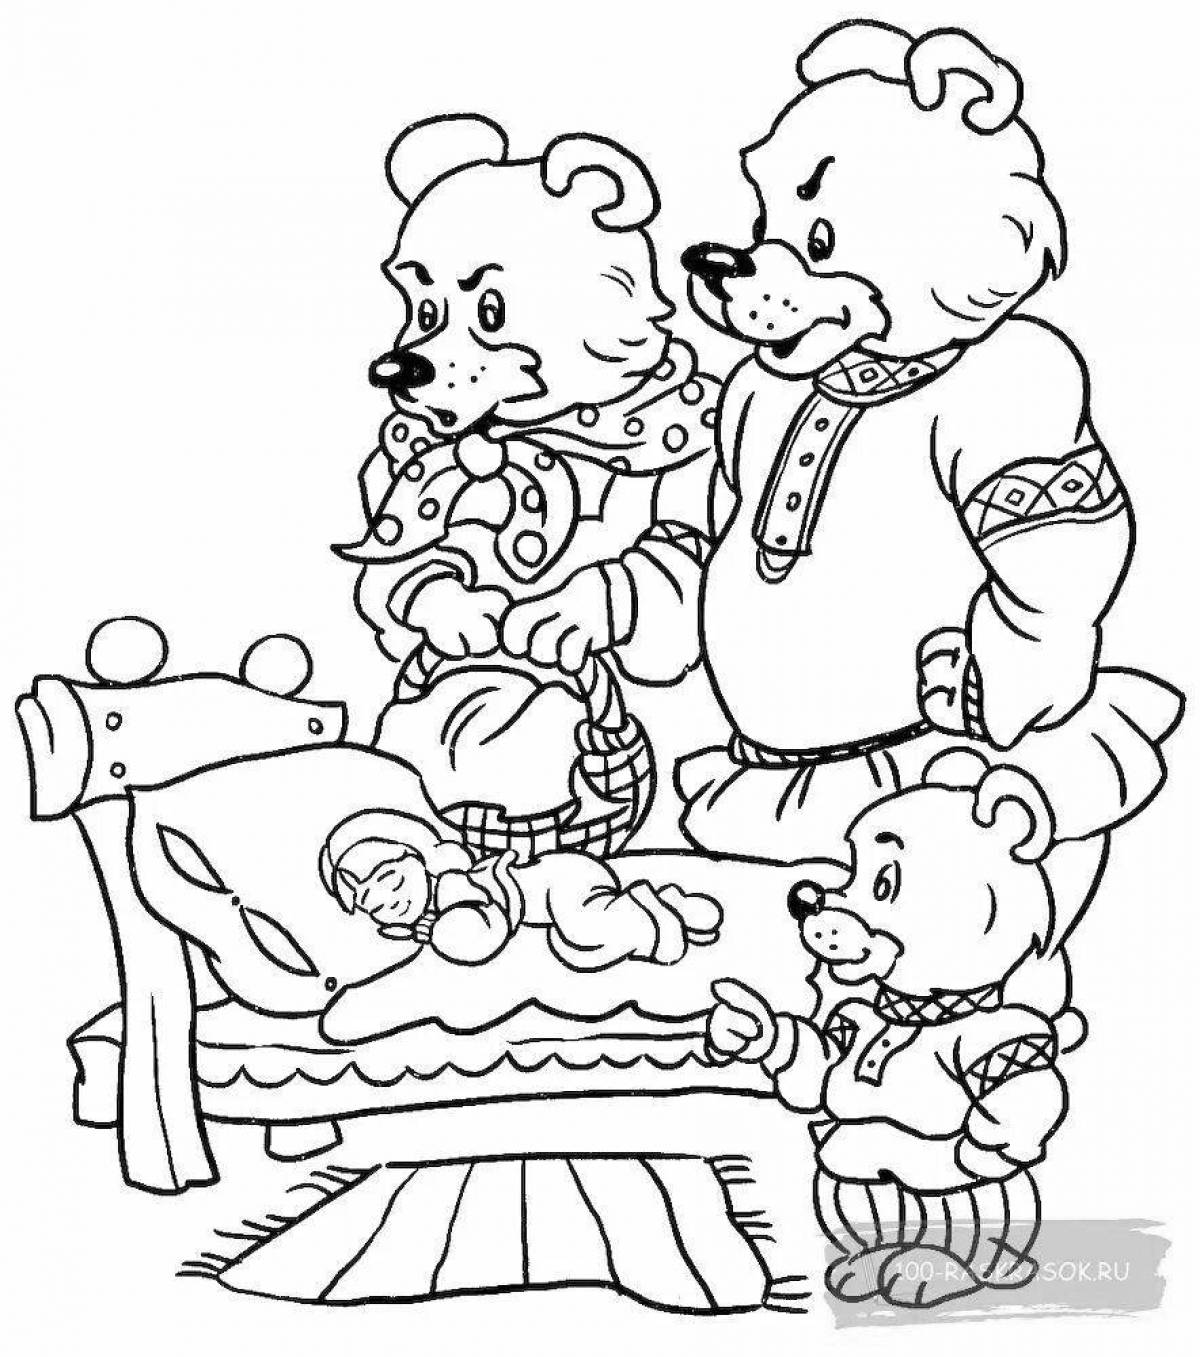 Three bears coloring book